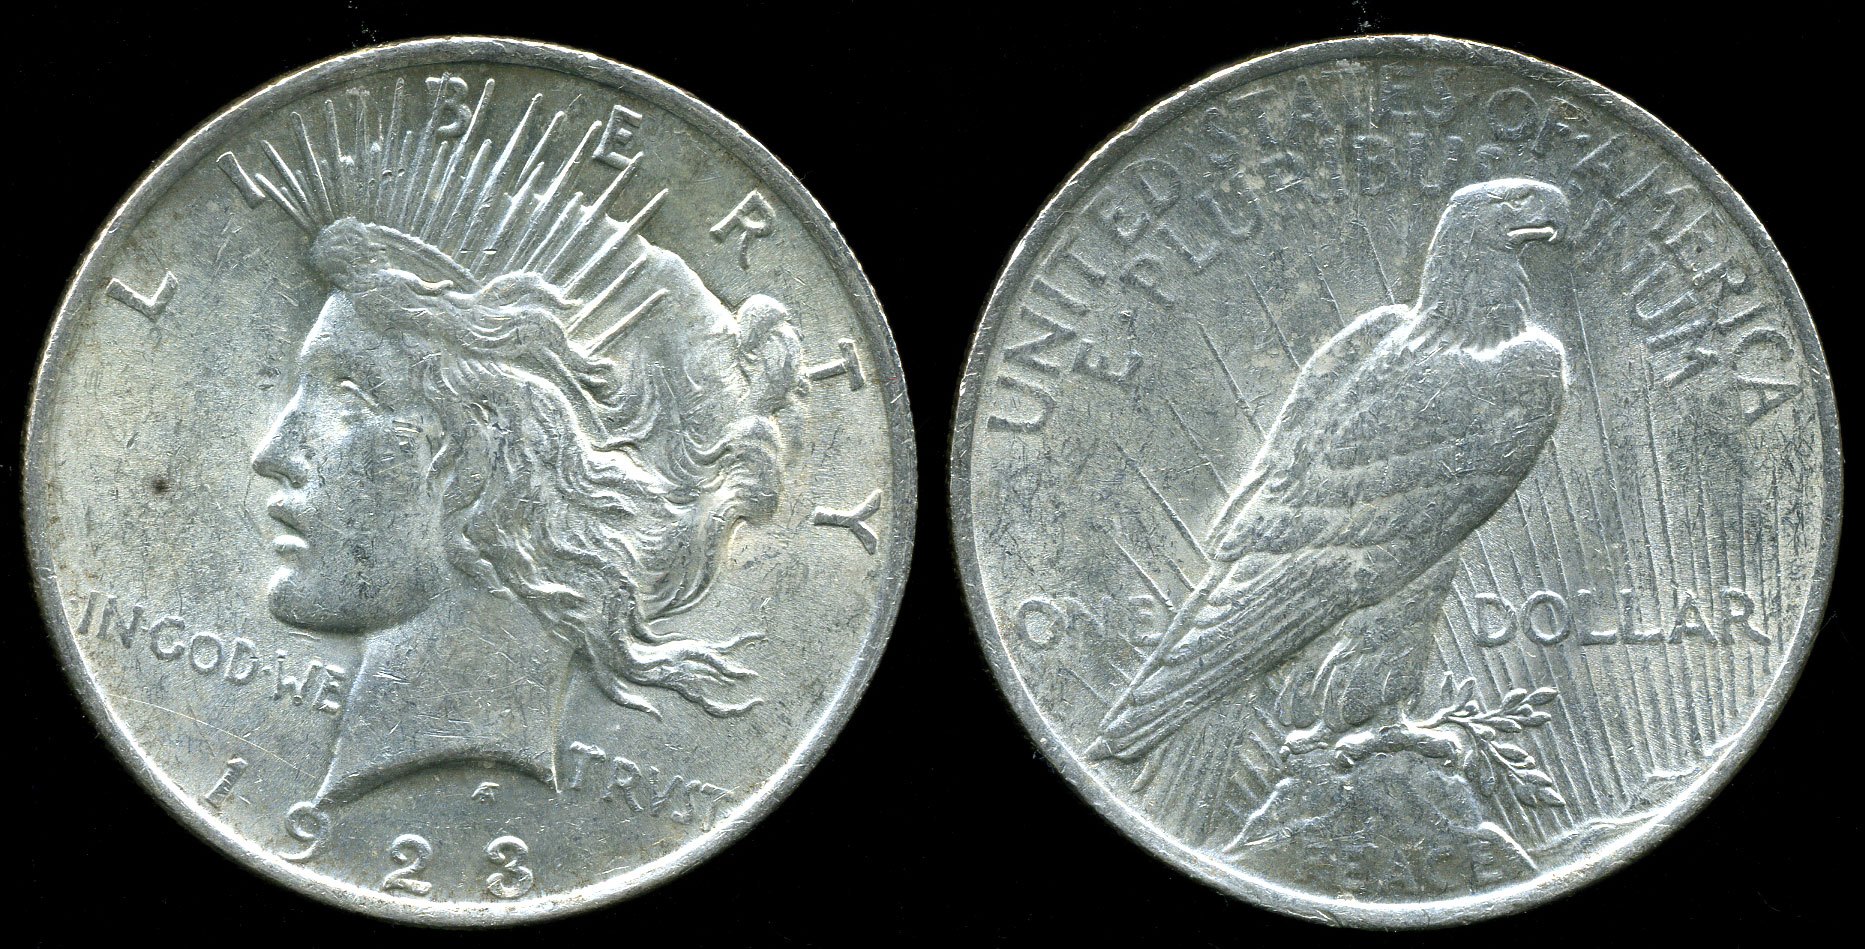 1 доллар драмом. США 1 доллар 1889 серебро Орел. США 1923. США 1922. Орел на долларе.